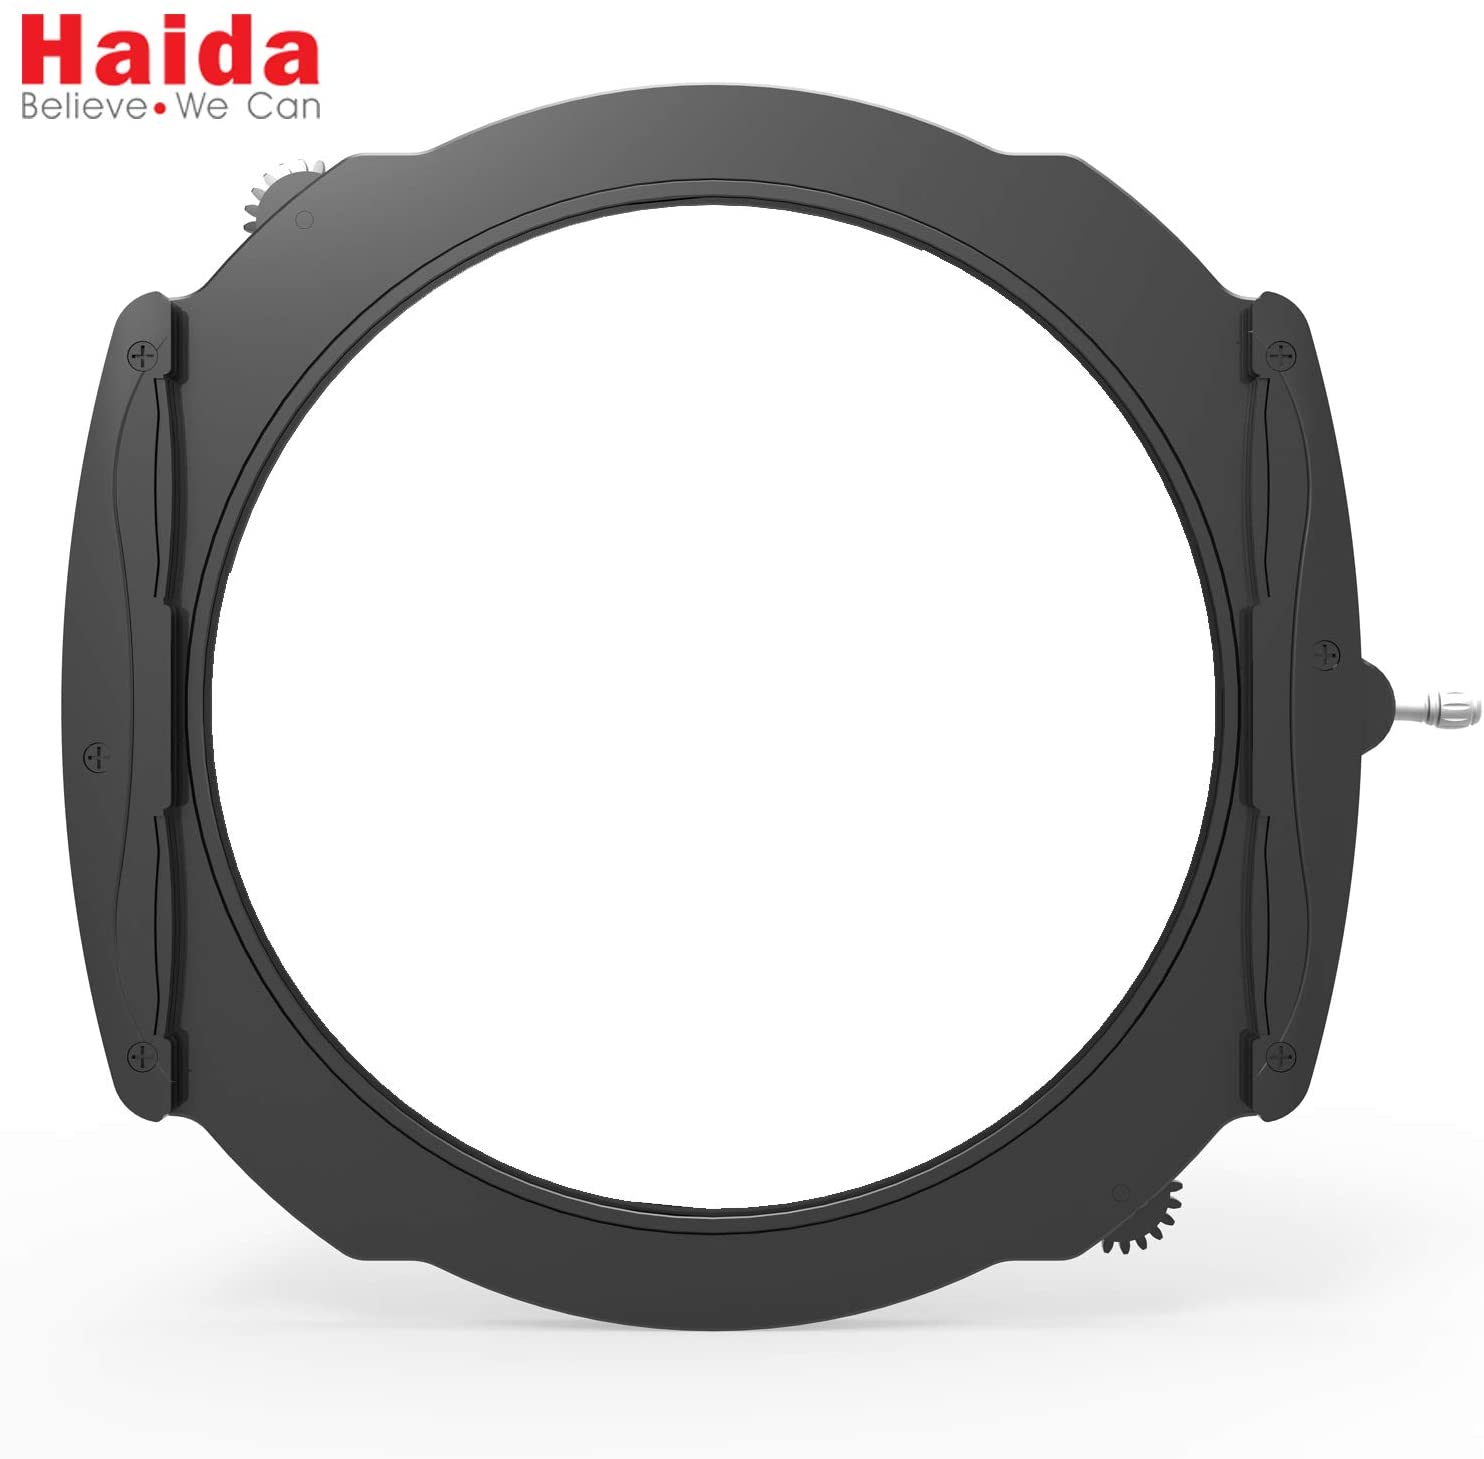 Haida M15 Filter Holder System for Sigma 14-24 F/2.8G DG HSM Art